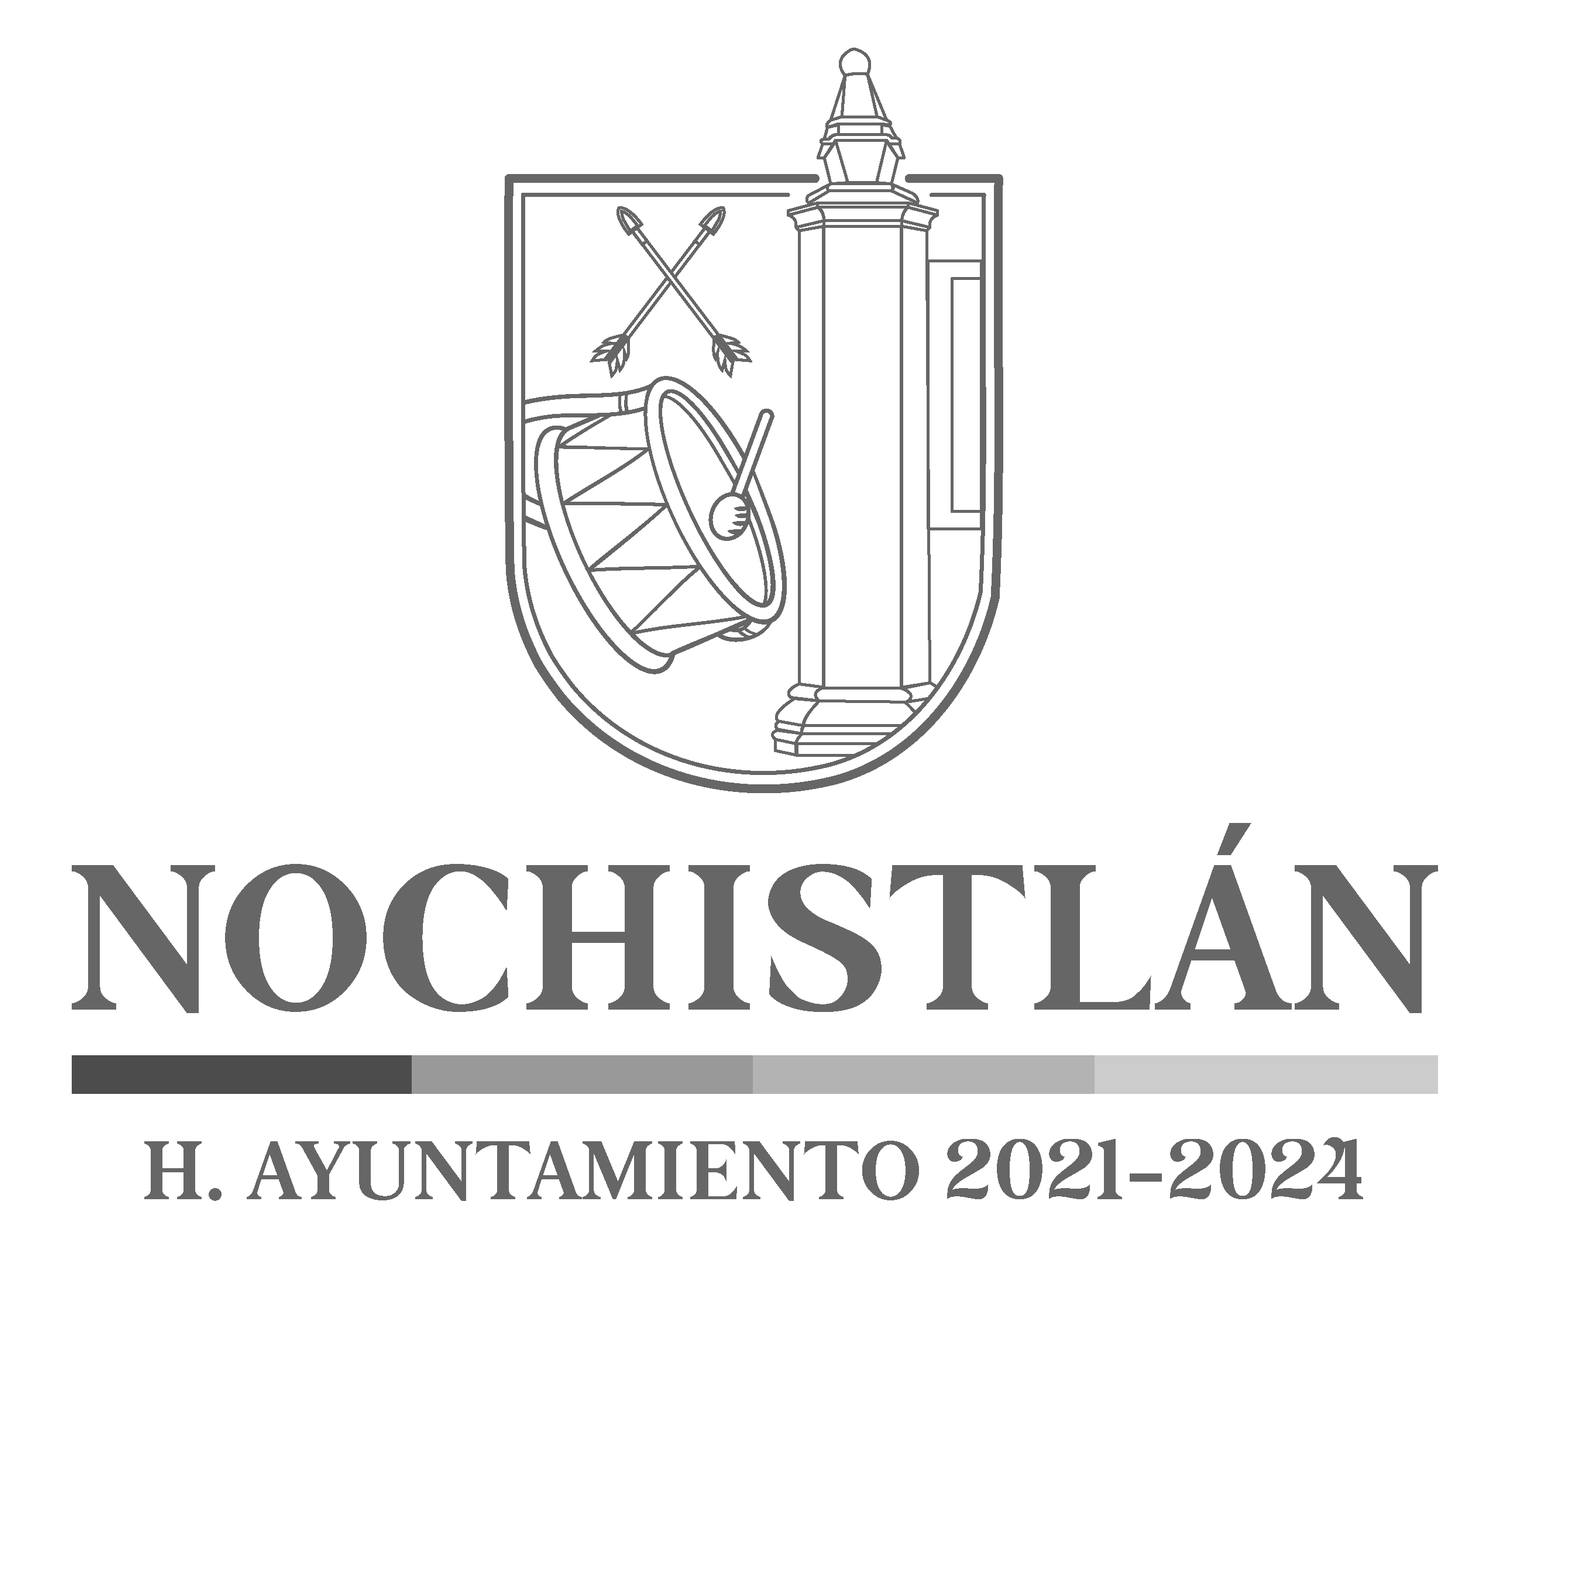 Administración 2021-2024